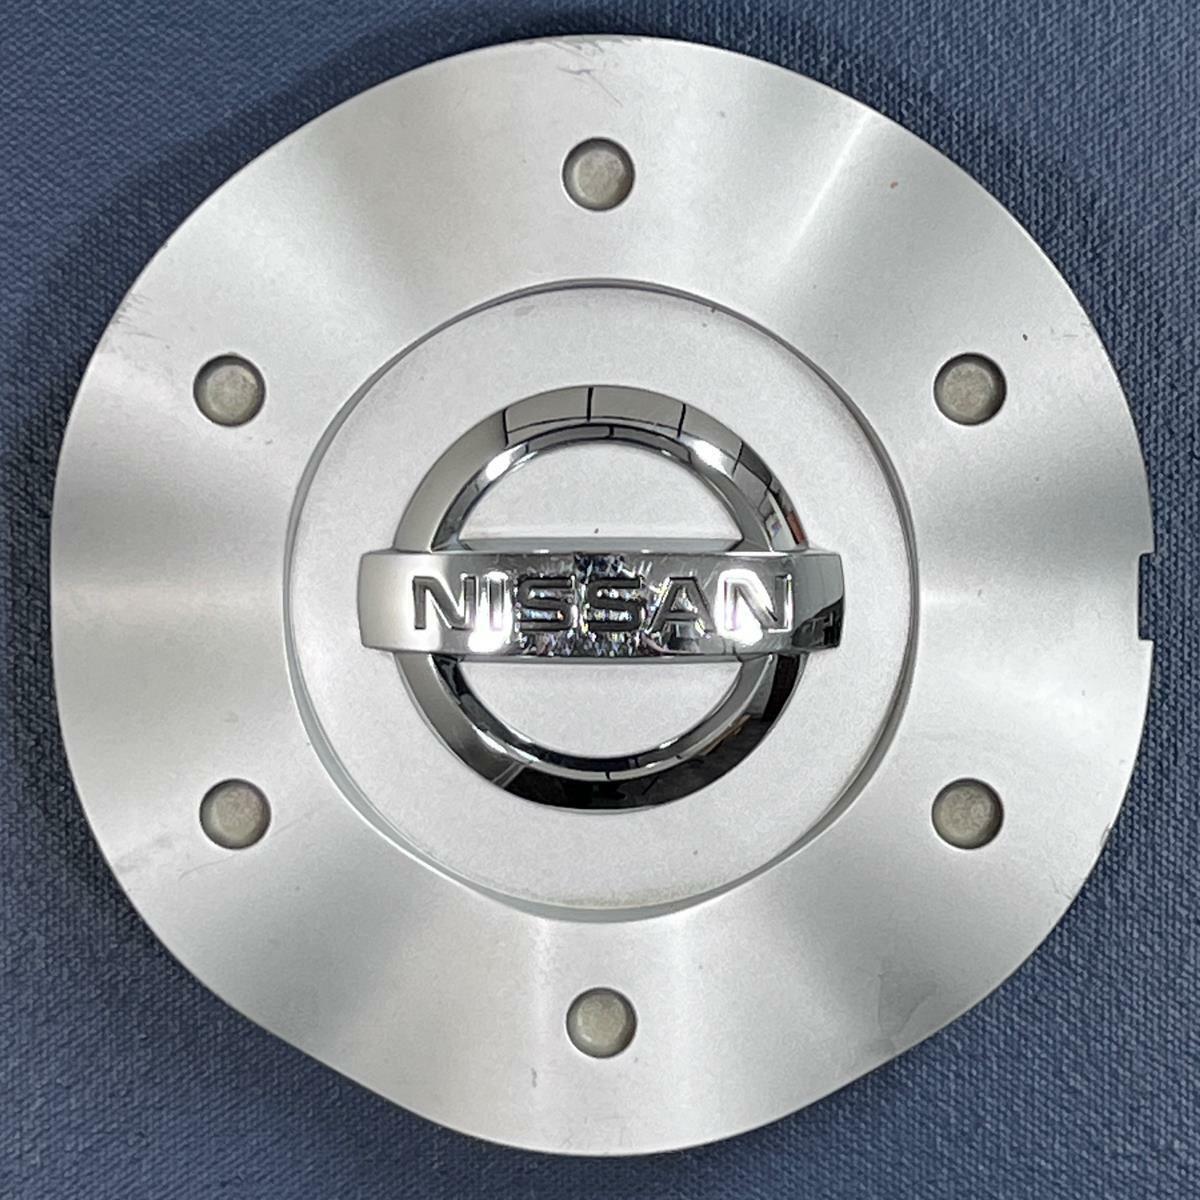 Primary image for 2003-2005 Nissan Murano # 62421B 18" Wheel Center Cap OEM # 40315CA100 USED